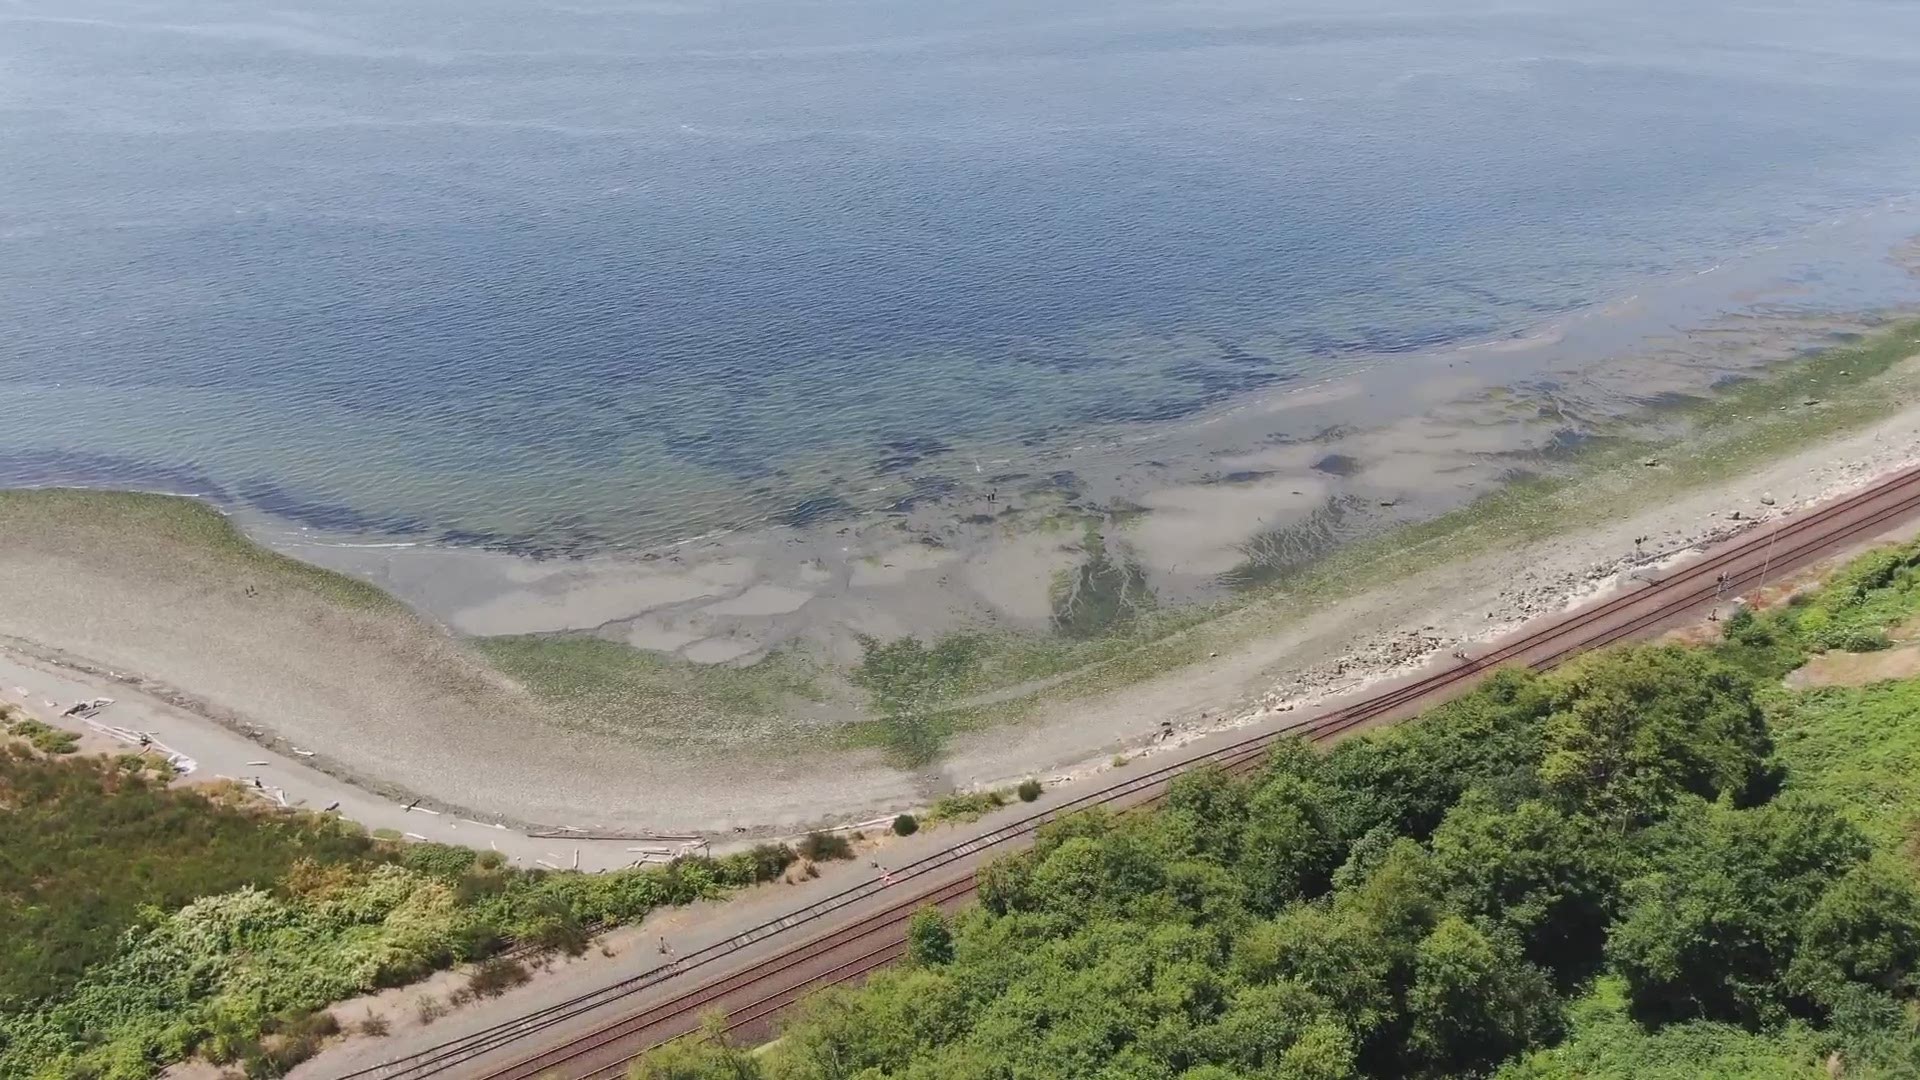 Take in a bird's-eye view of Richmond Beach Park in Shoreline on July 23, 2020.